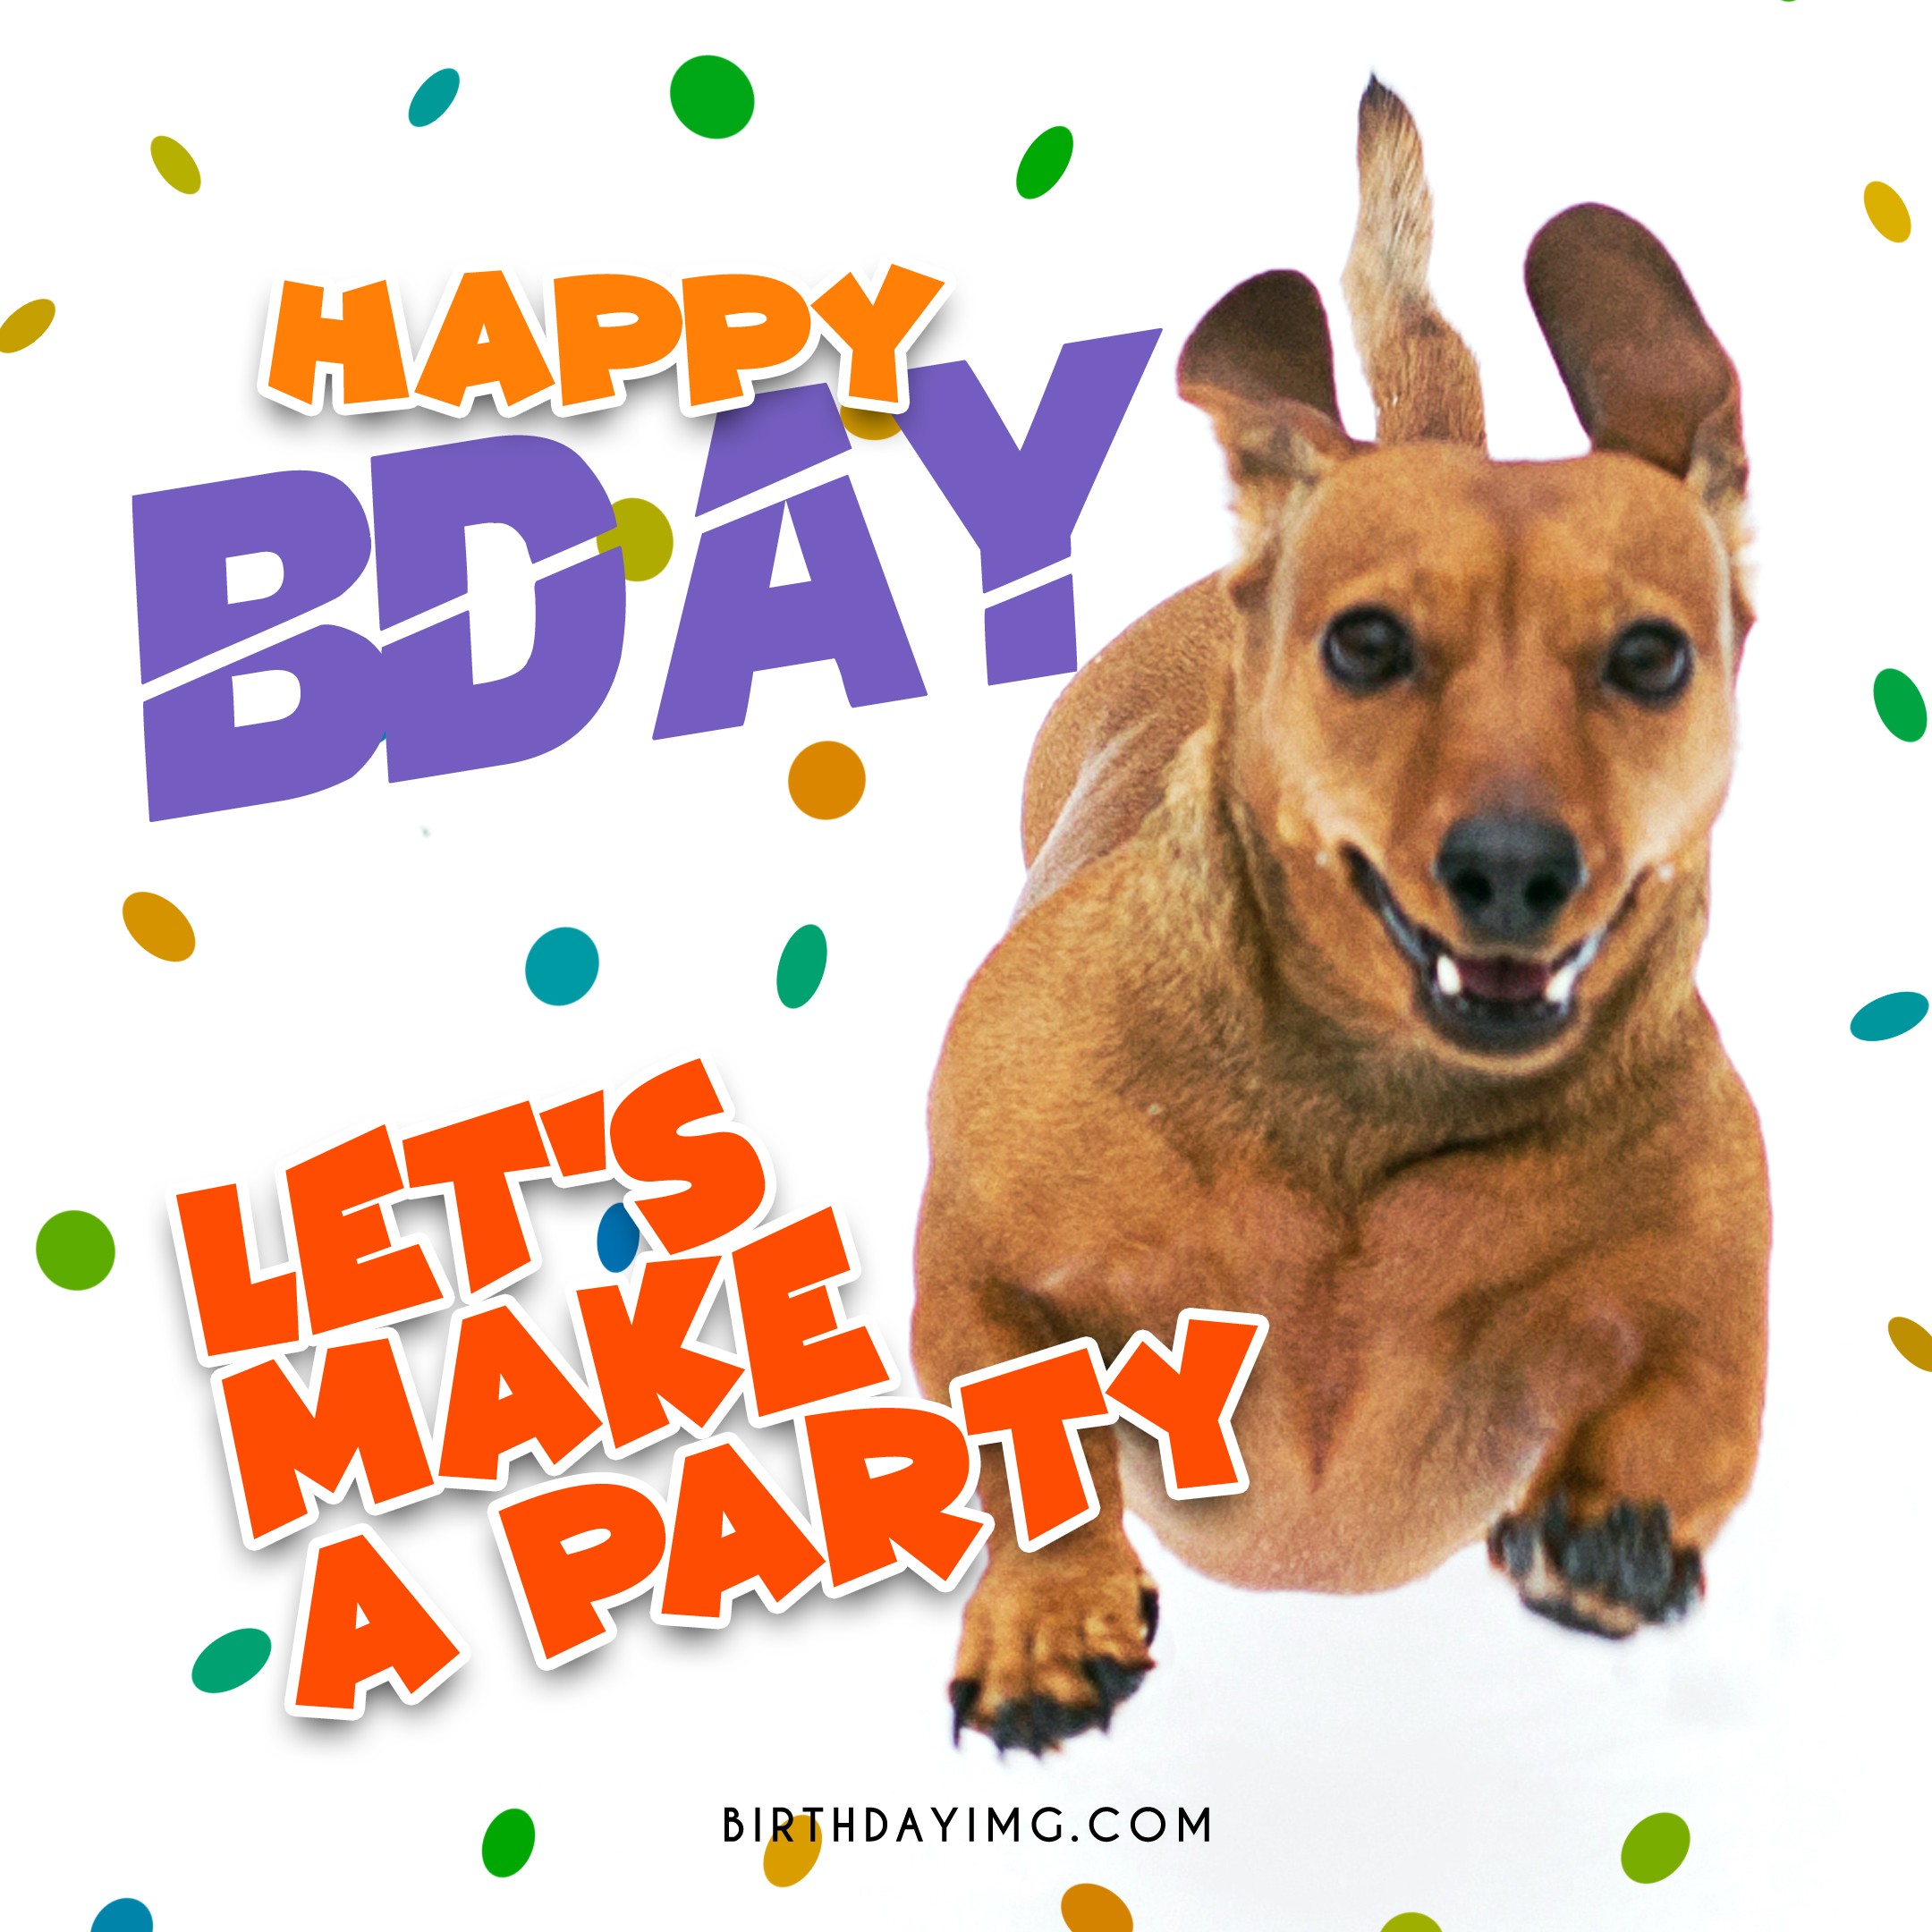 Free Funny Dog Happy Birthday Image 